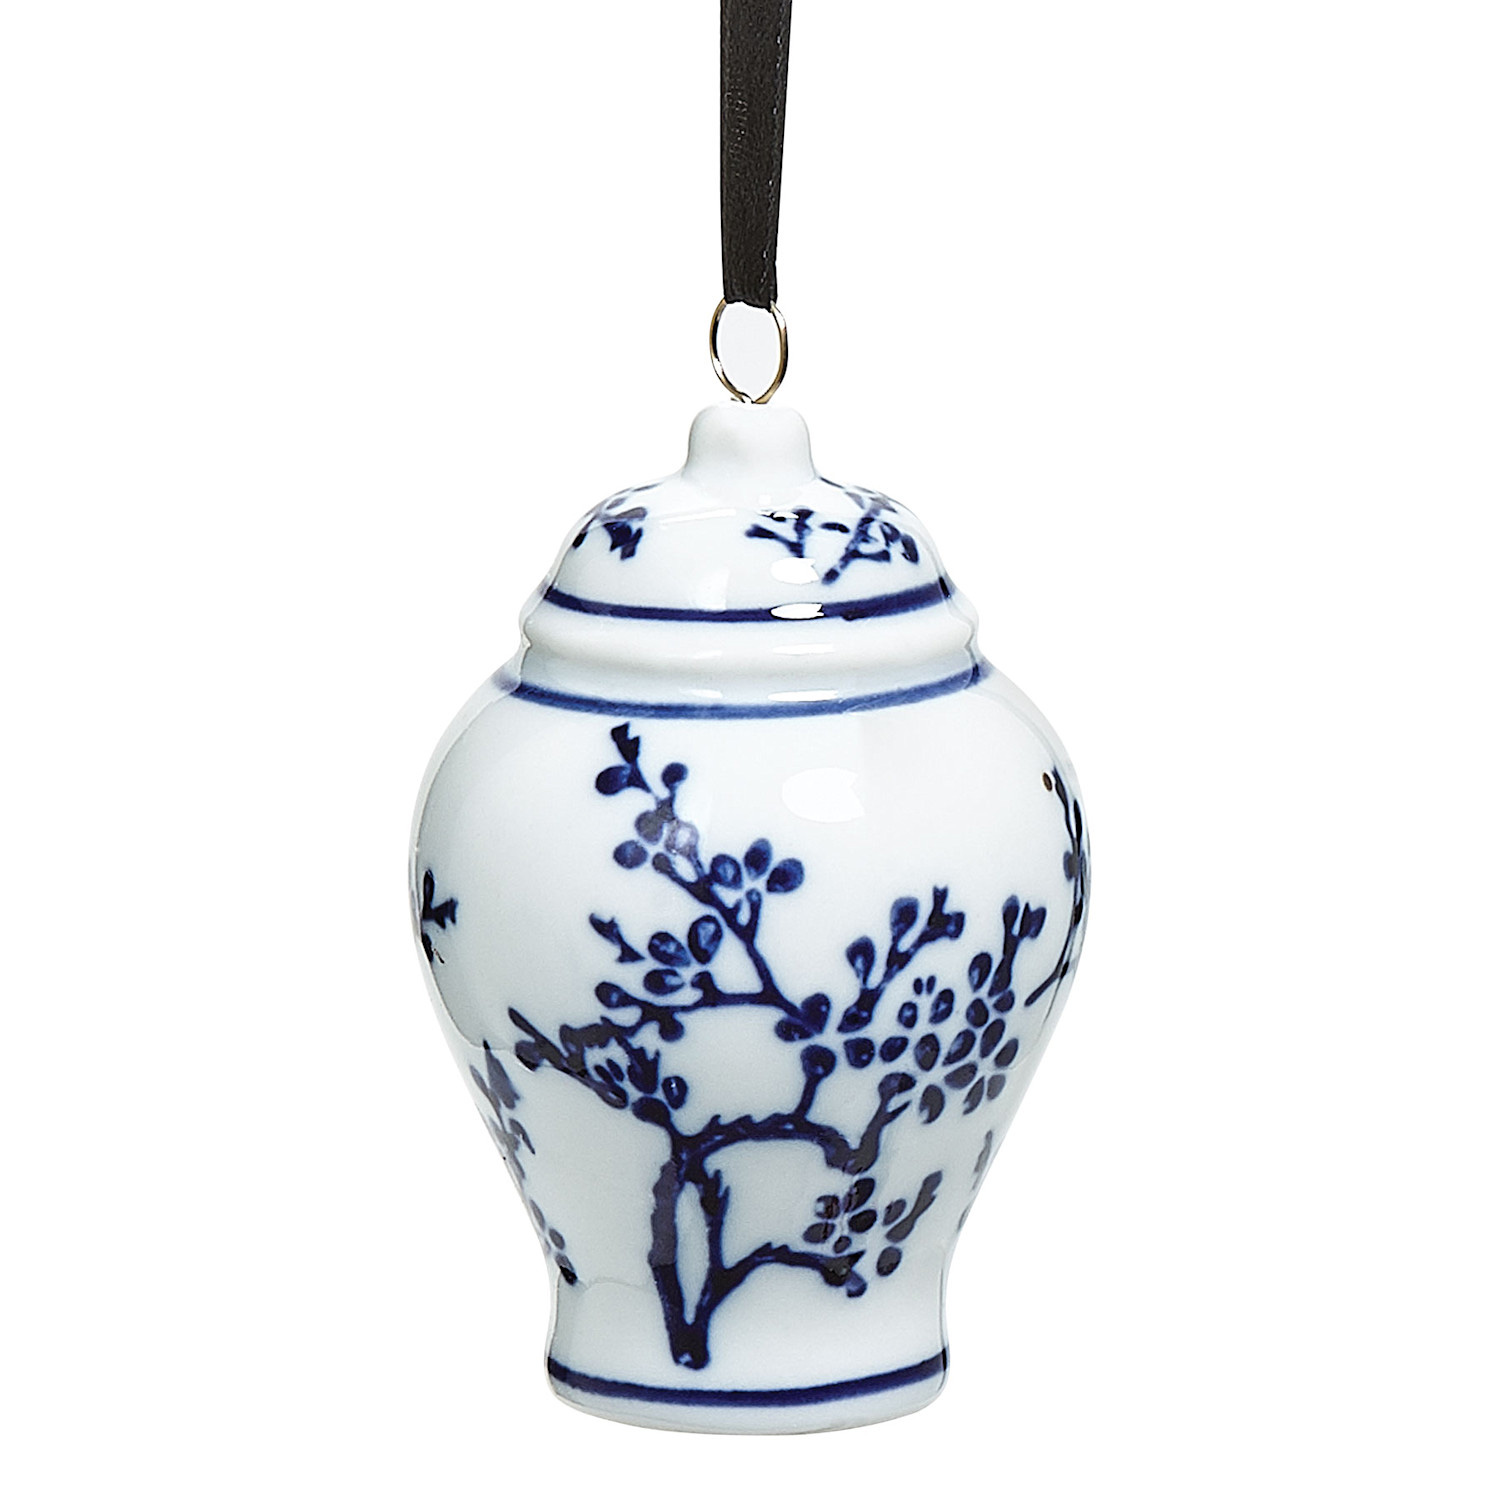 Bandwagon L9920 Jar Ornaments Set - White for sale online | eBay